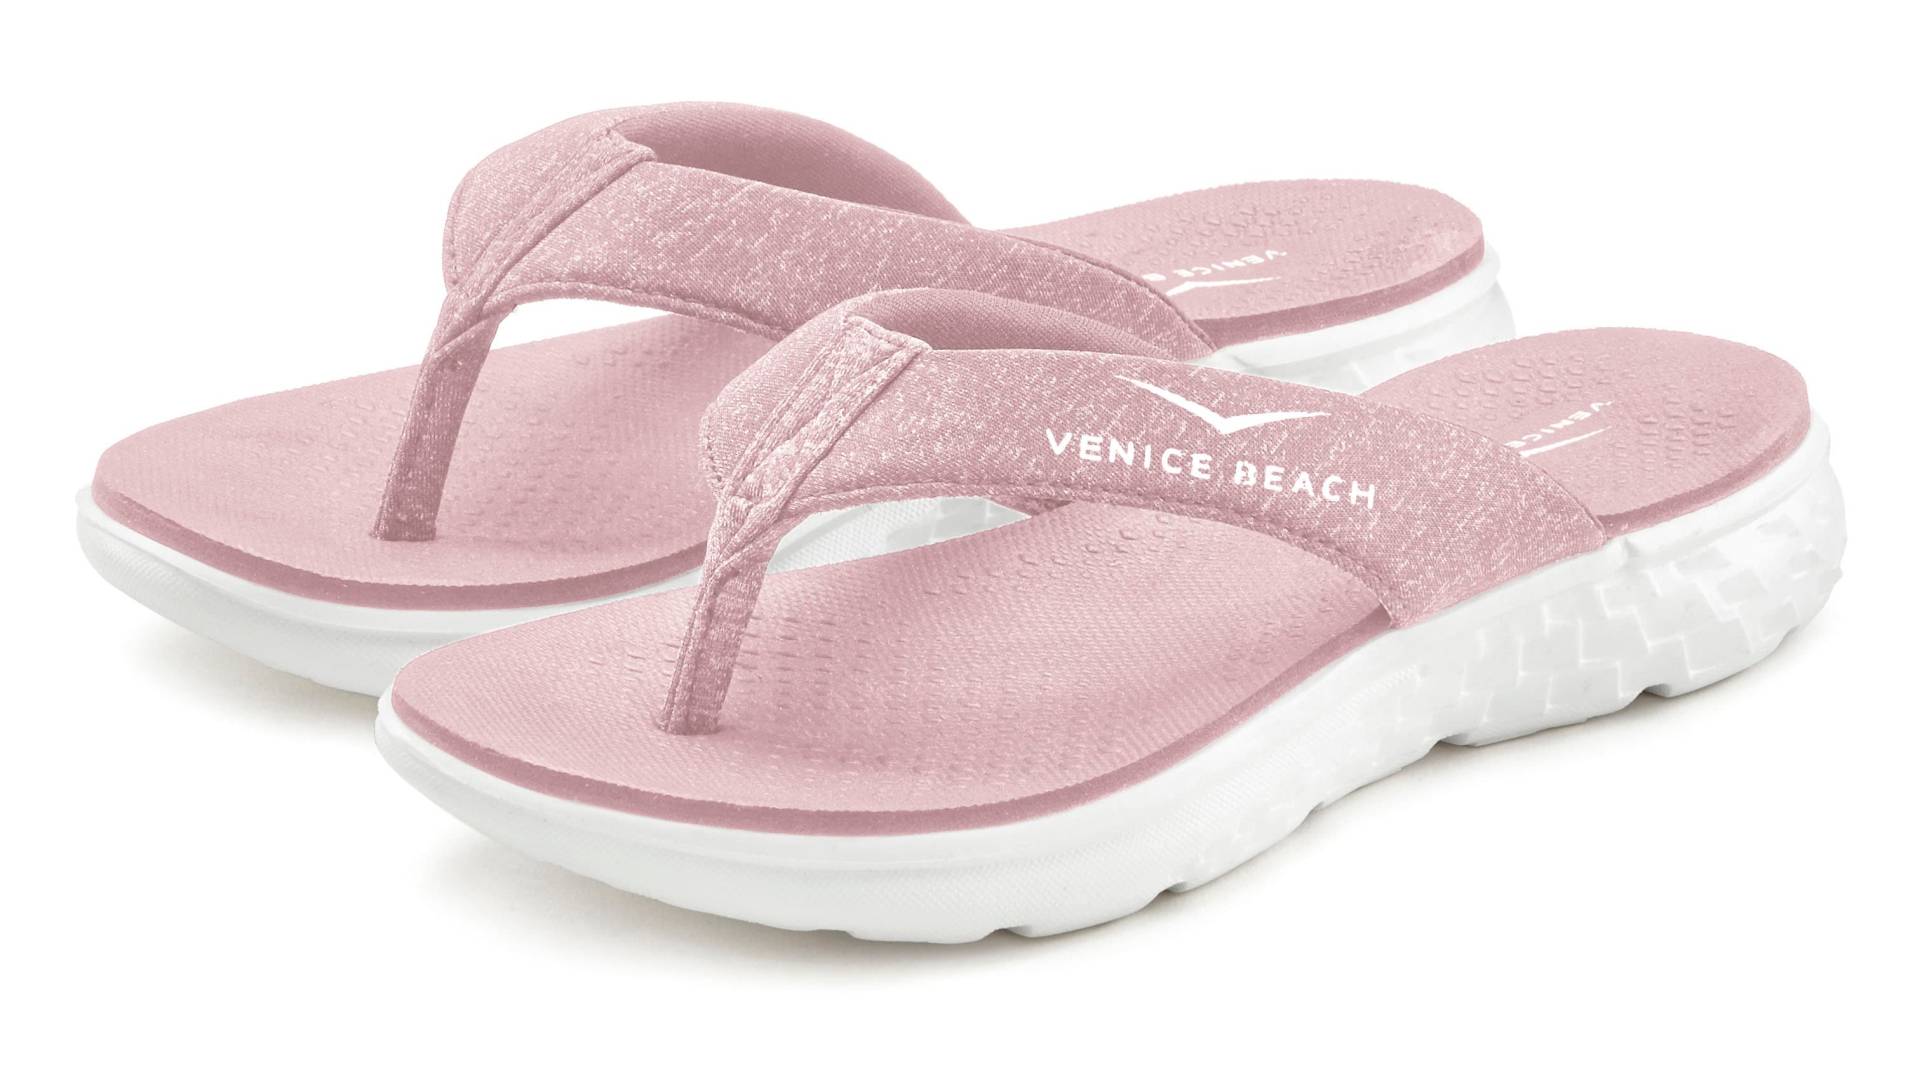 Venice Beach Badezehentrenner, Sandale, Pantolette, Badeschuh ultraleicht im sportiven Look VEGAN von Venice Beach